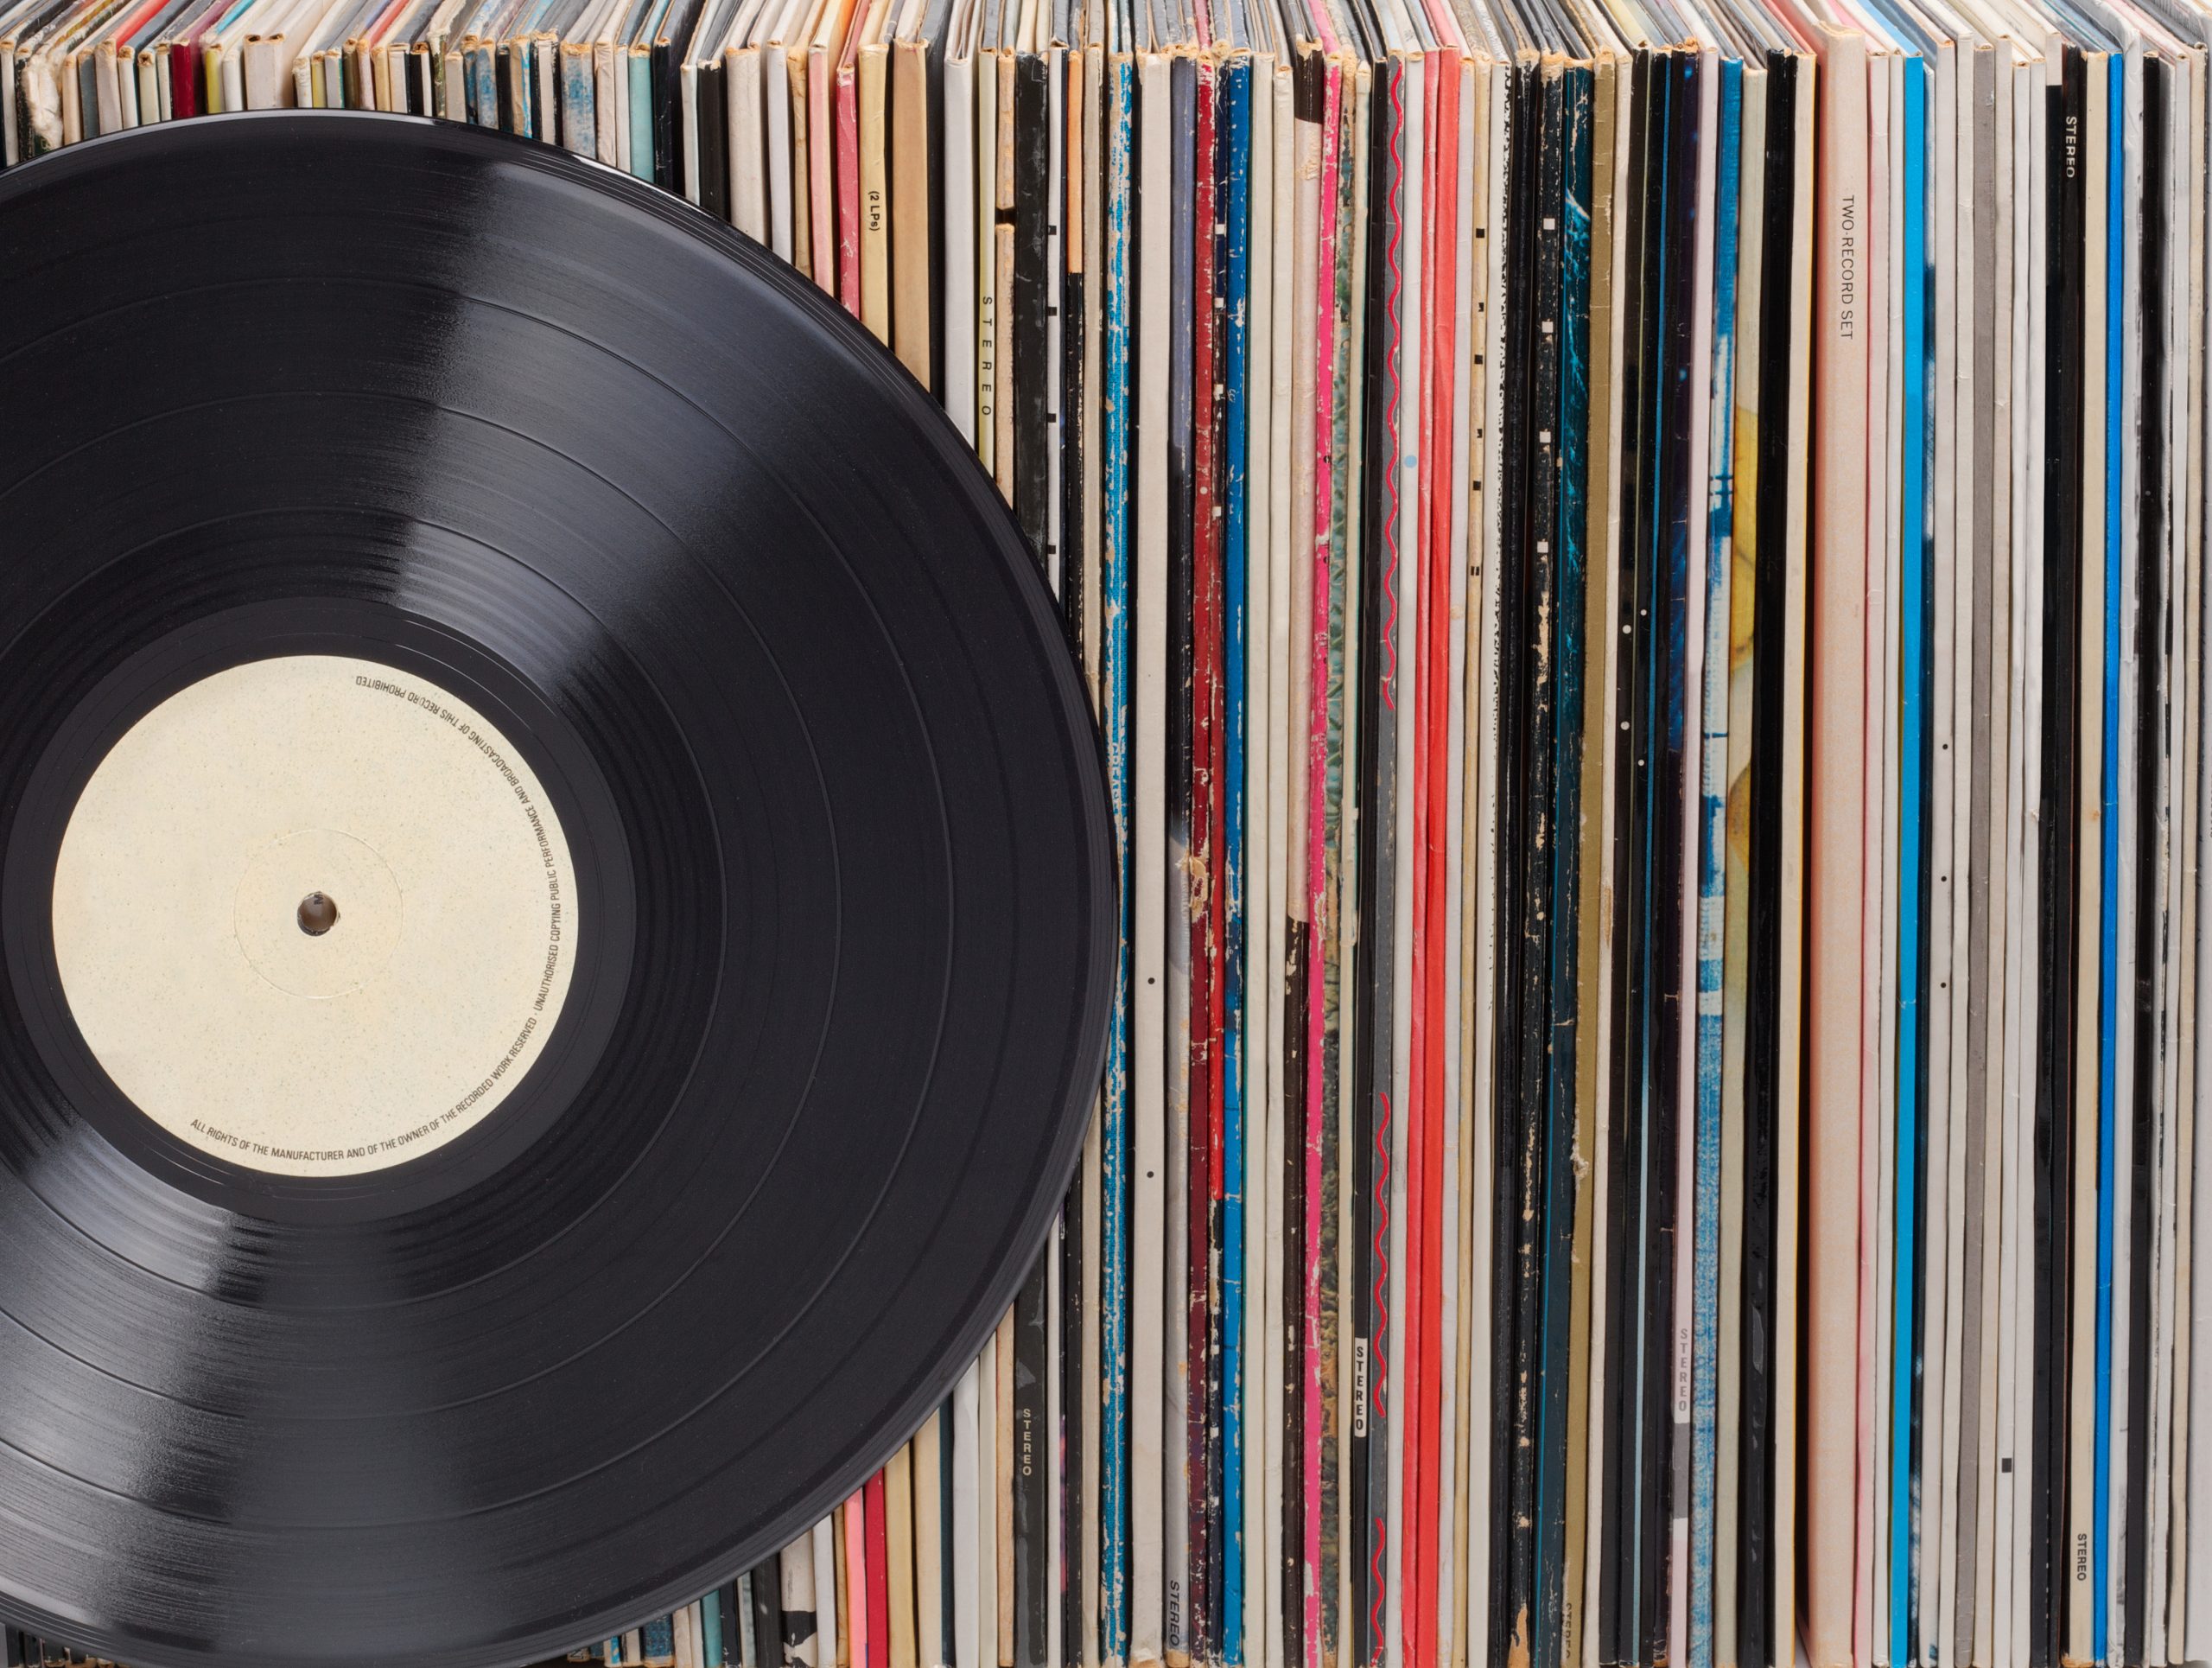 Vinyl Albums for your listening pleasure